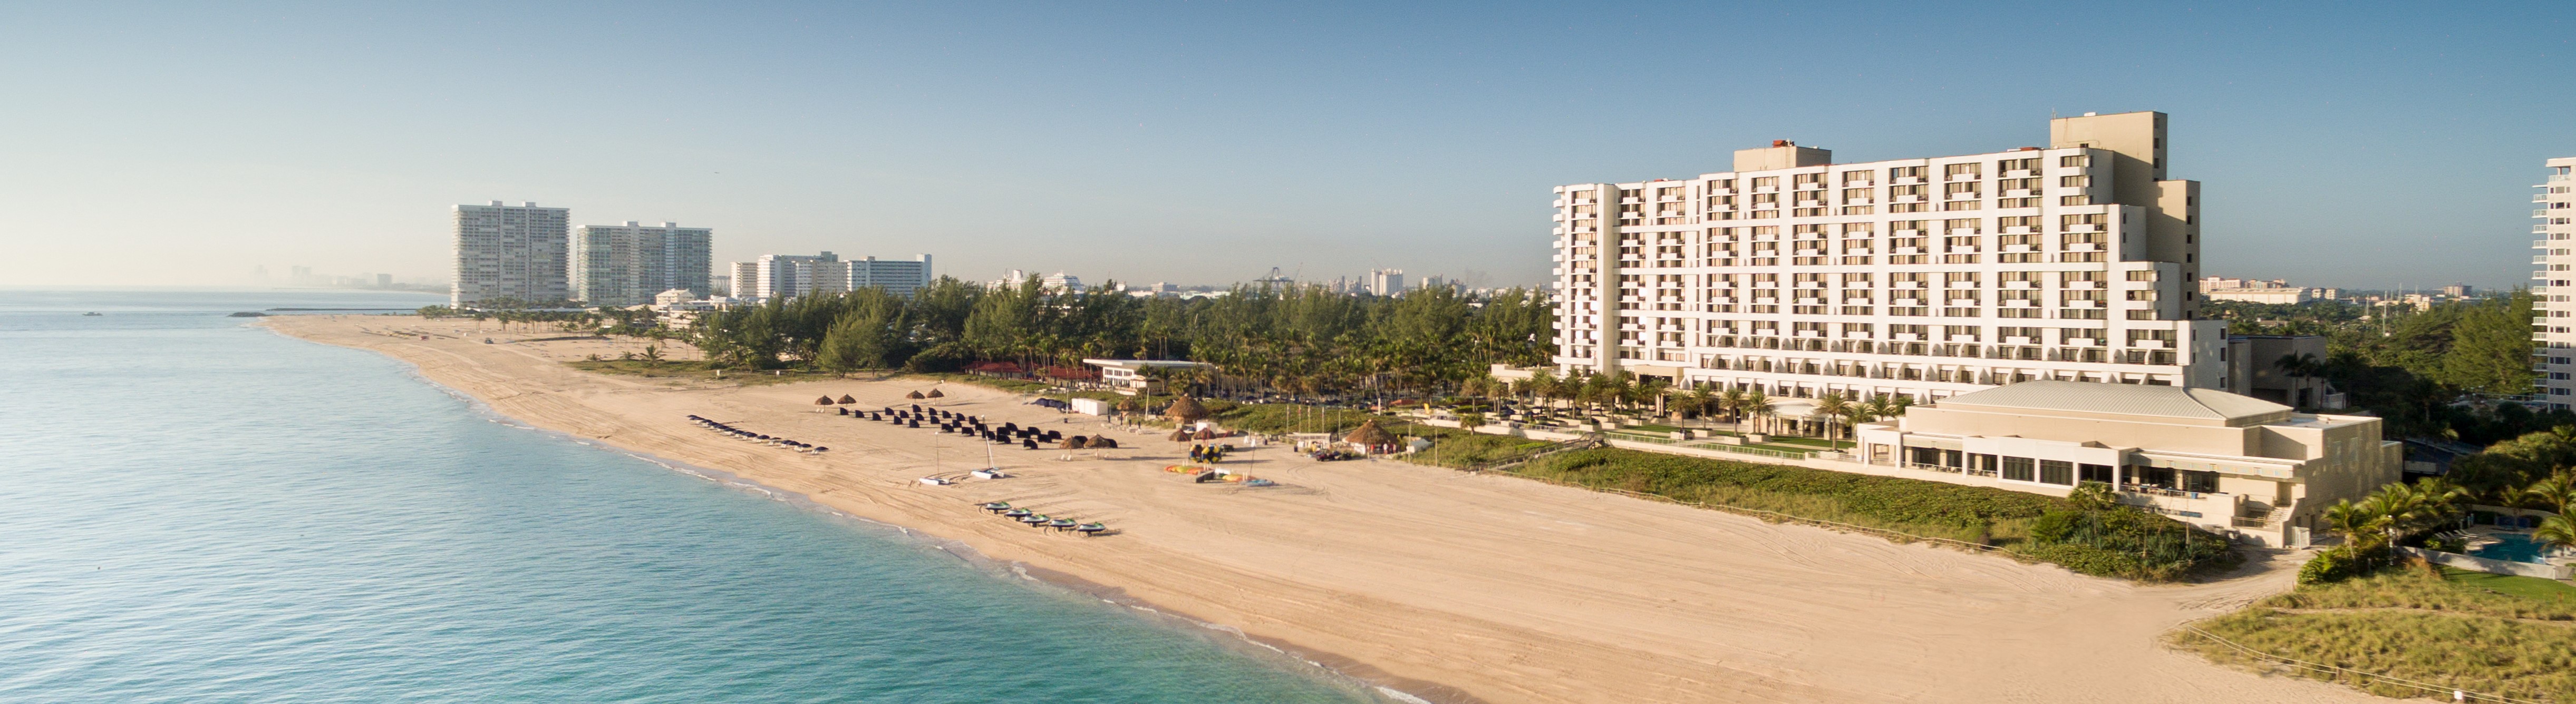 View of Fort Lauderdale Marriott Harbor Beach Resort & Spa